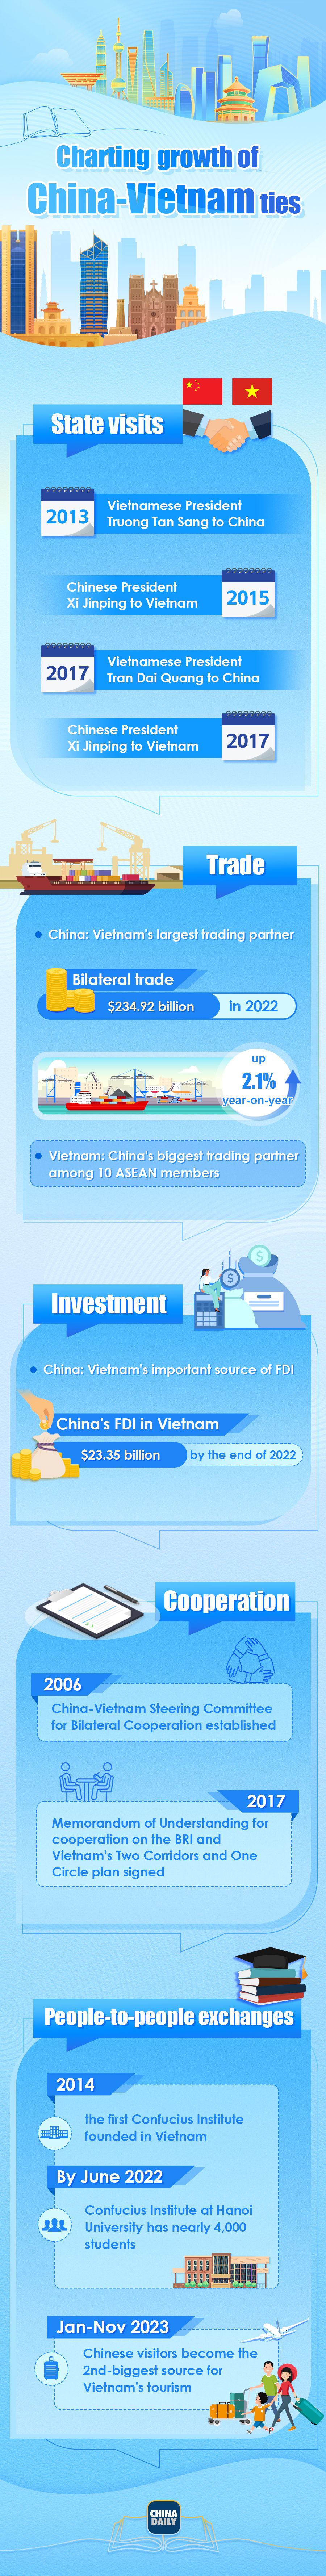 Charting growth of China-Vietnam ties